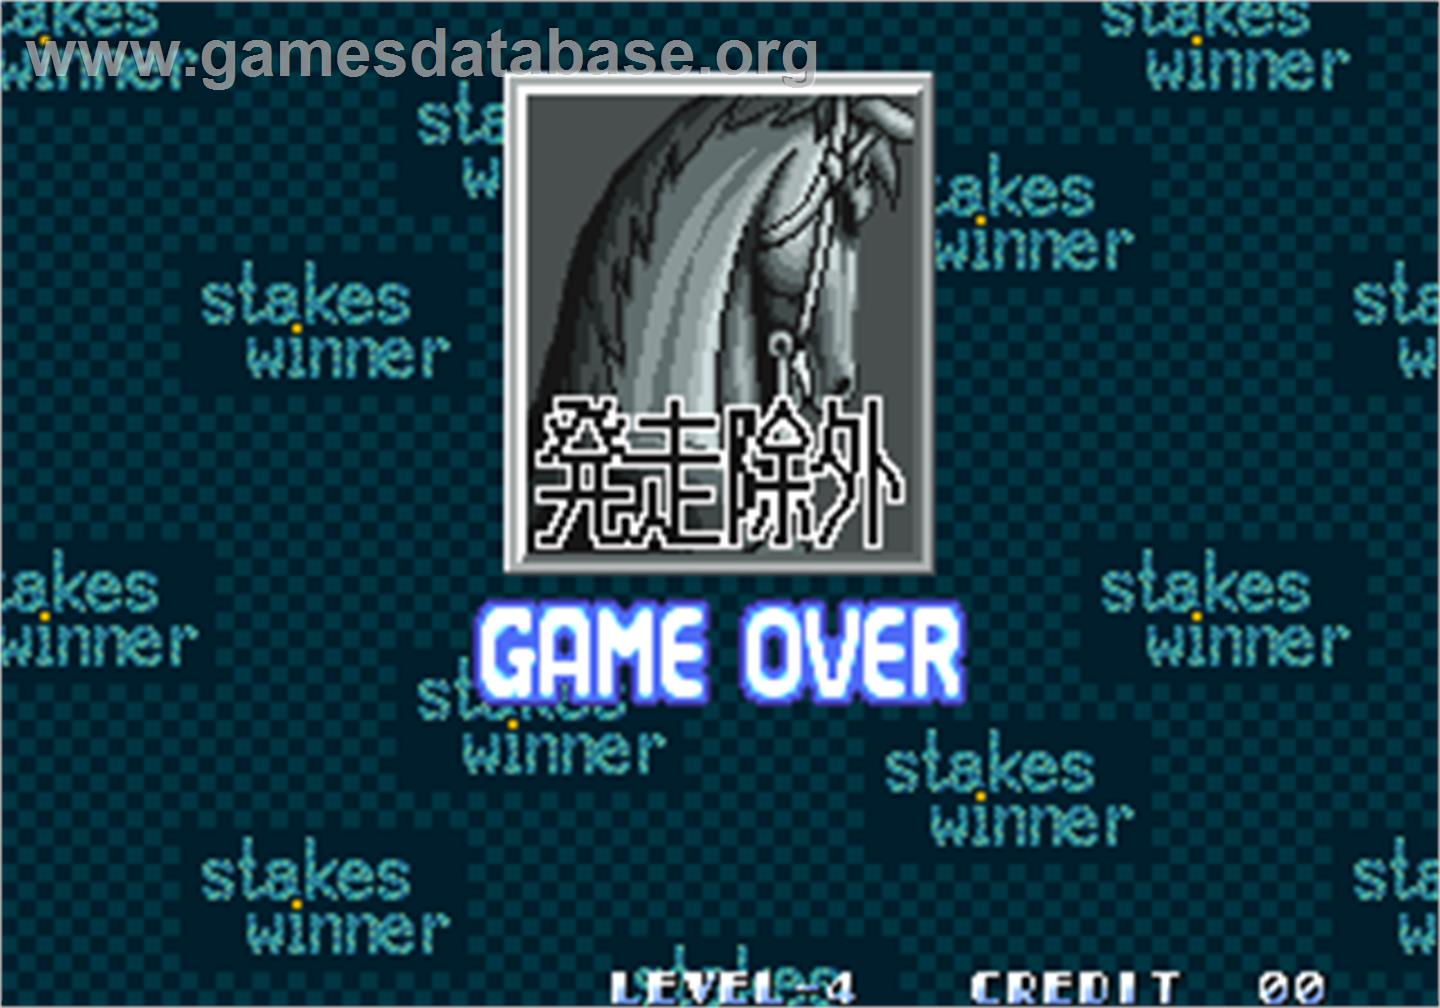 Stakes Winner / Stakes Winner - GI kinzen seihae no michi - Arcade - Artwork - Game Over Screen